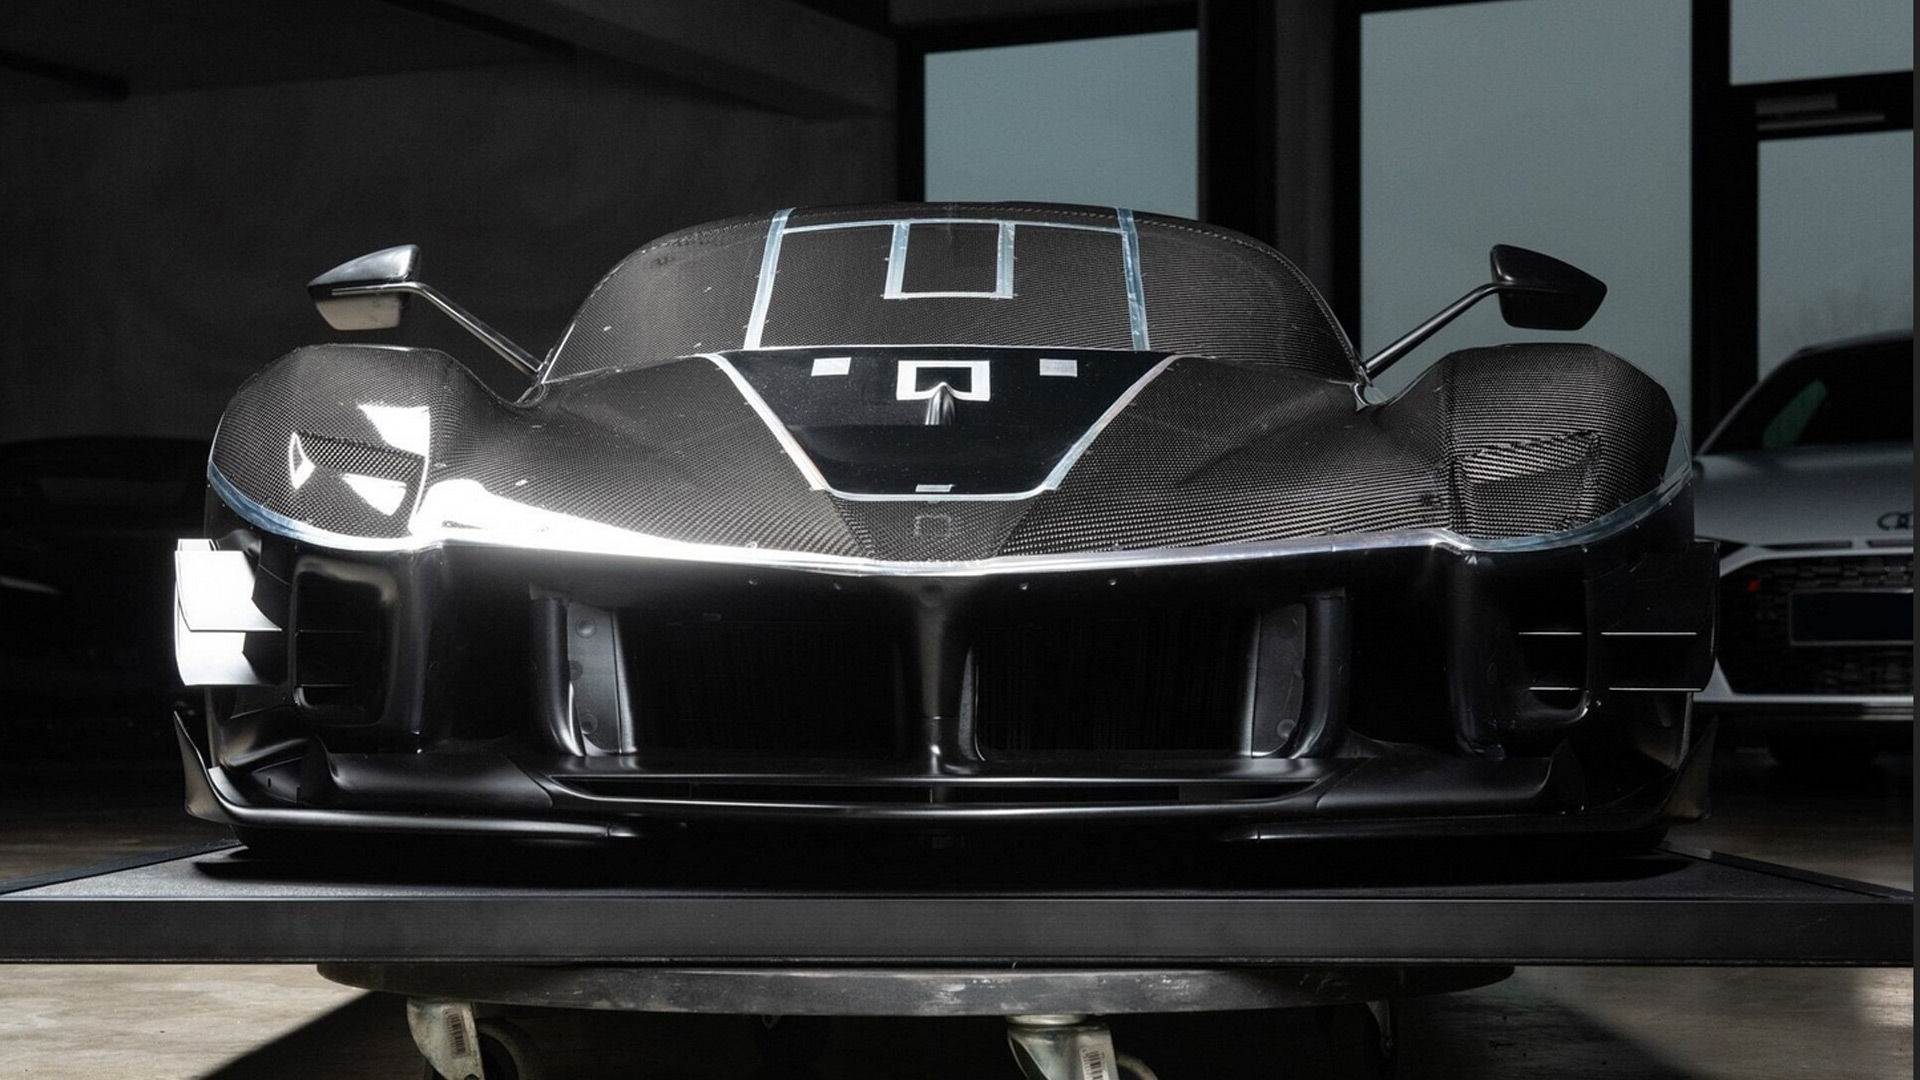 Ferrari FXX K Evo wind tunnel test model - Photo credit: RM Sotheby's